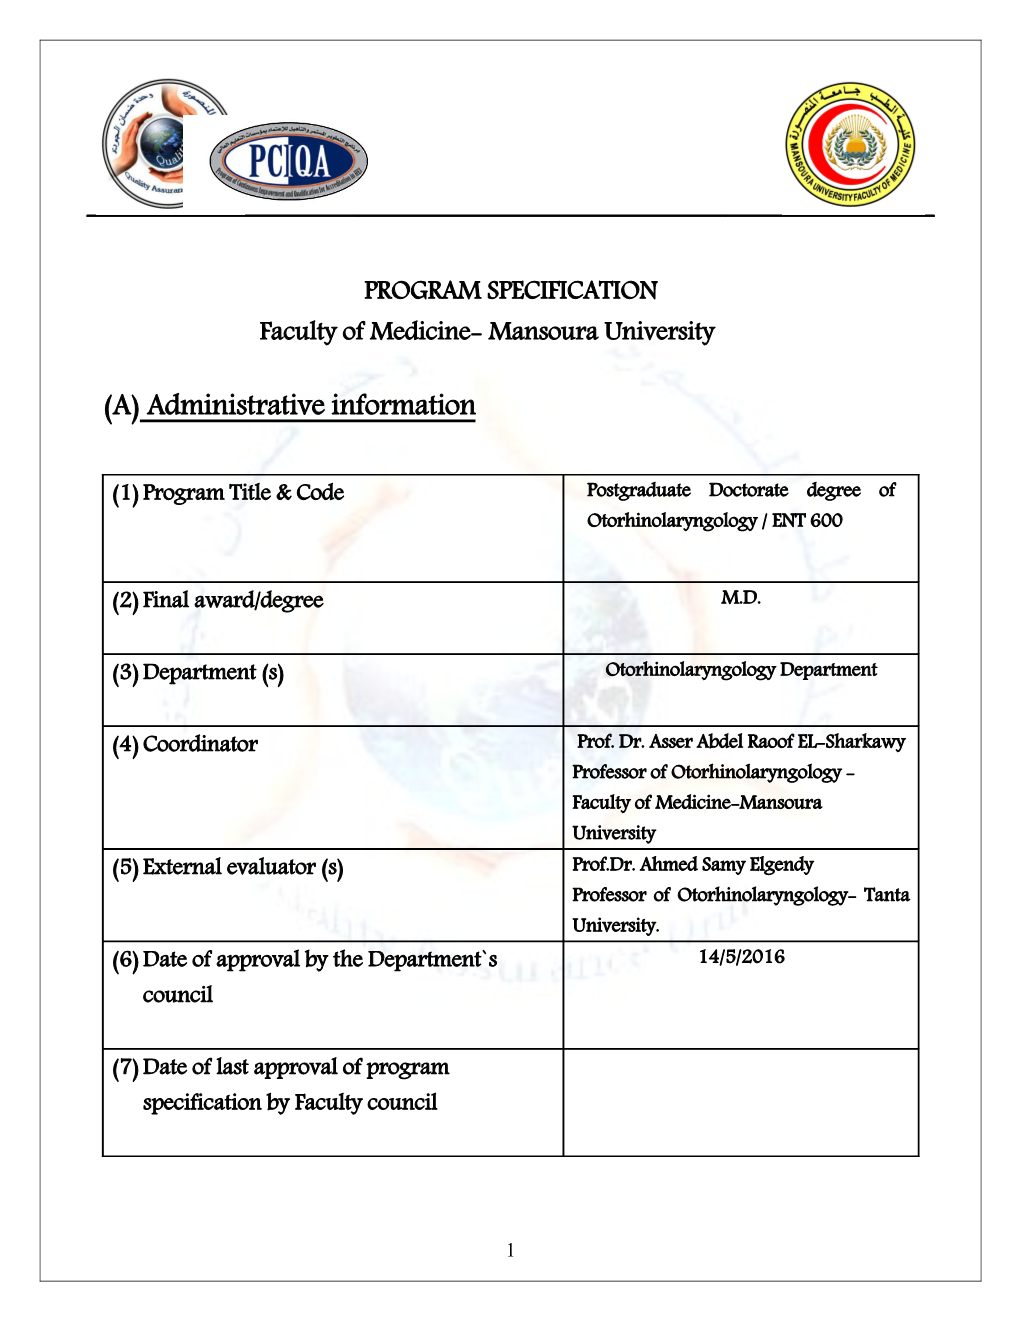 Faculty of Medicine-Mansourauniversity